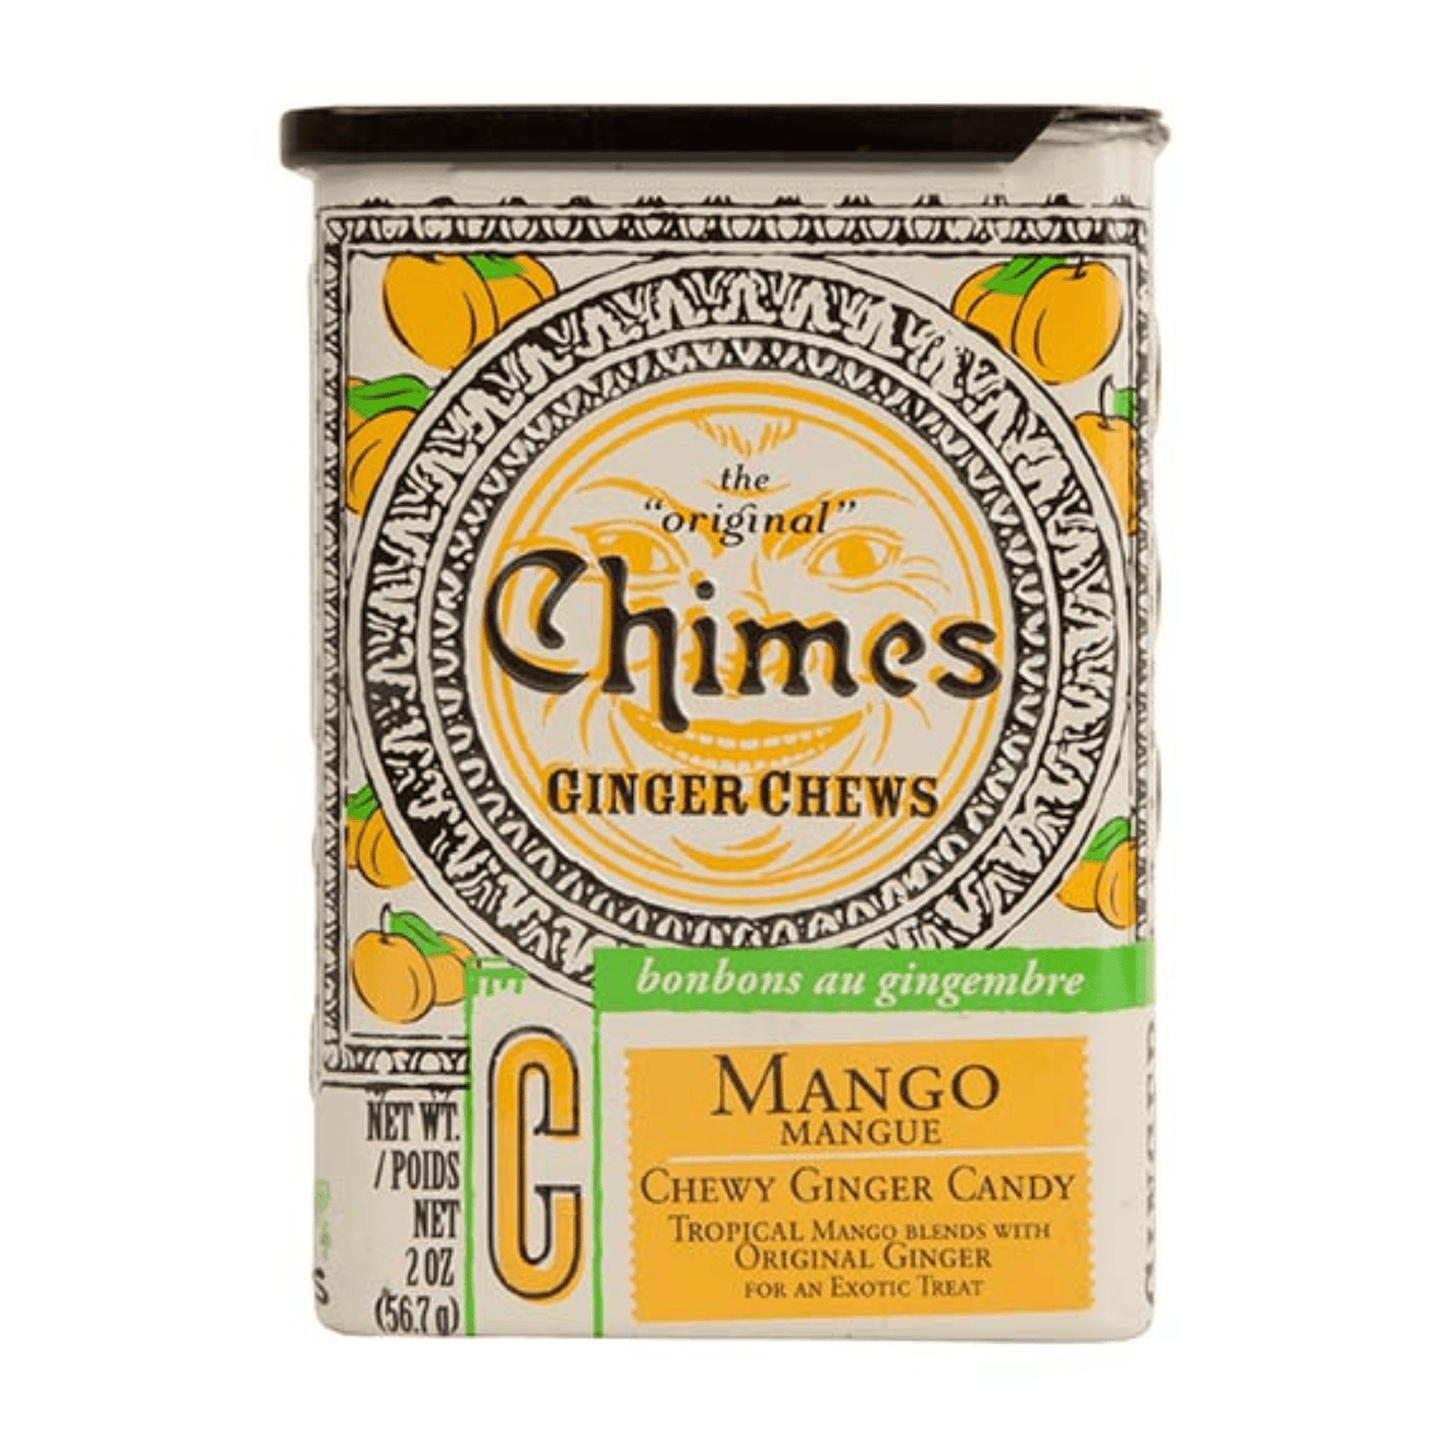 Primary Image of Ginger Chews Tin - Mango